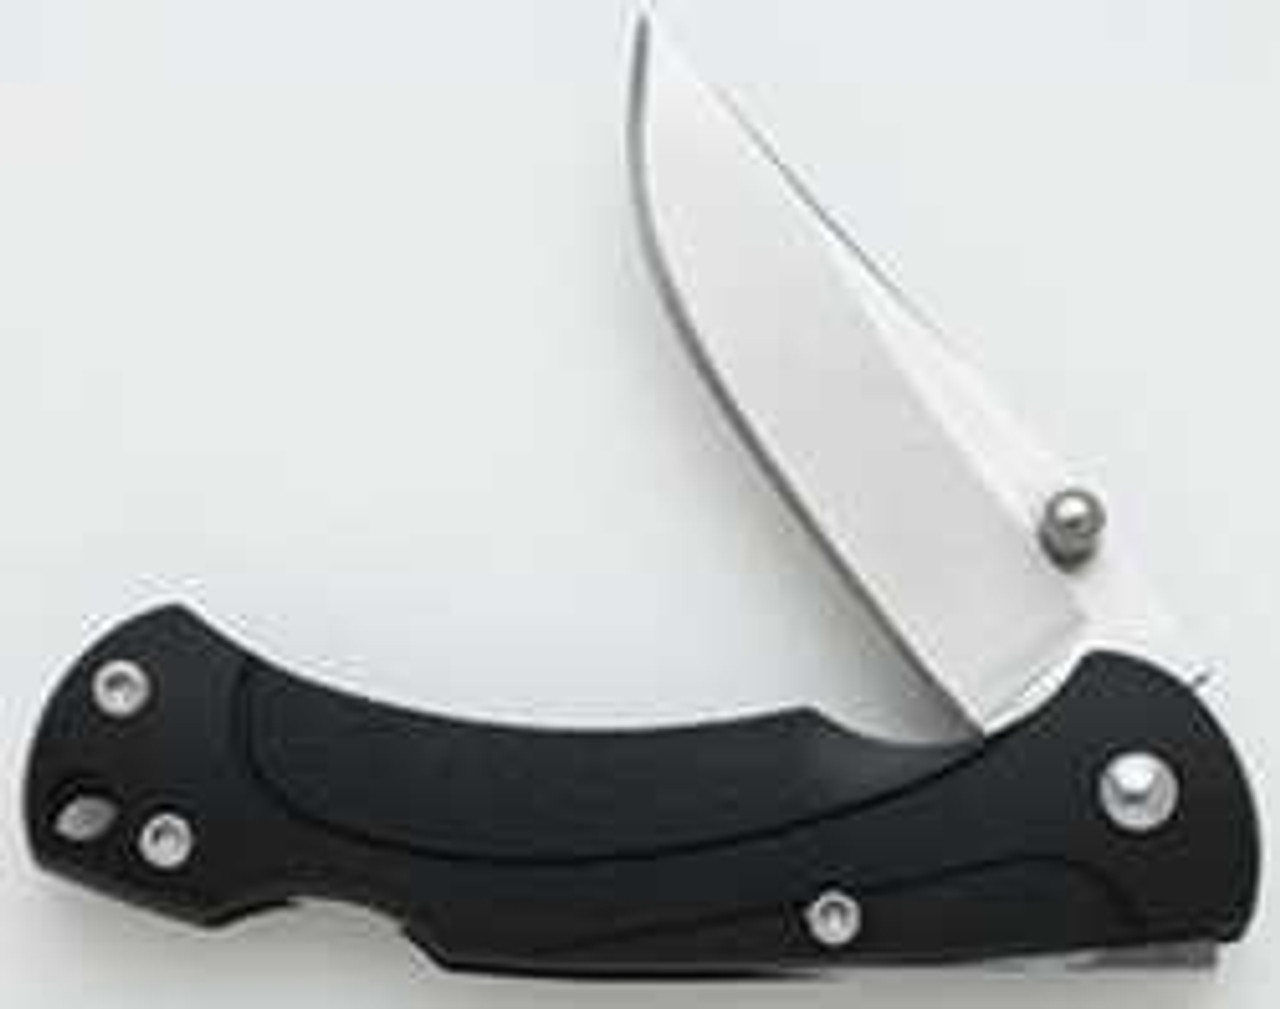 TecX® by Case TL-1 Lockback, 440 Stainless Drop Blade, Black Handle & Pocket Clip